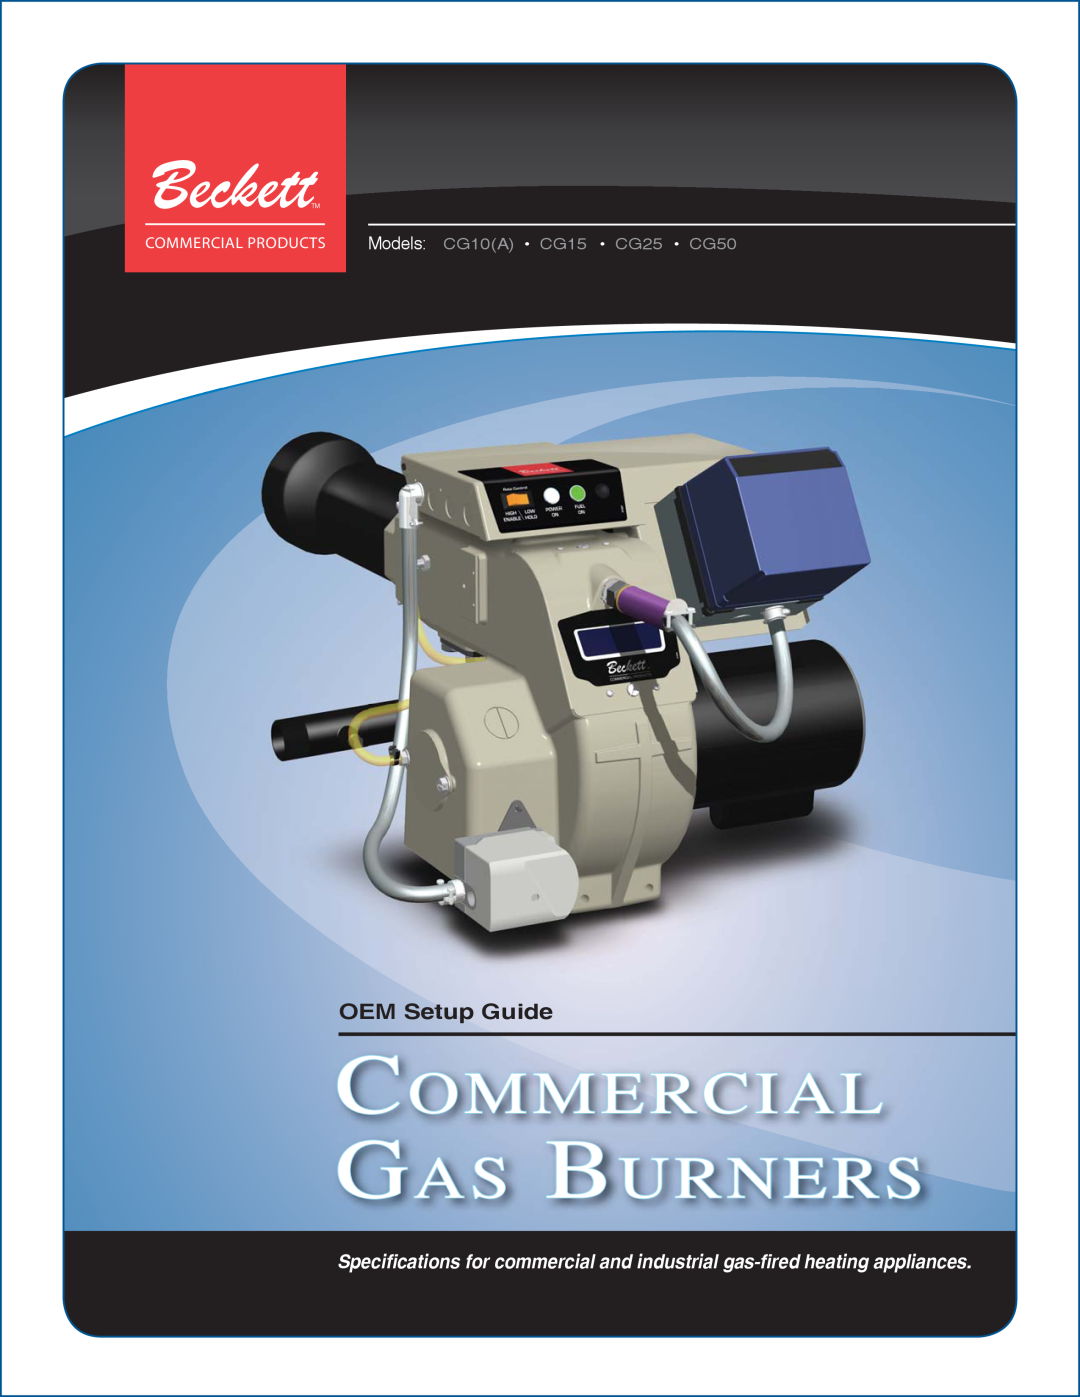 Beckett CG10(A) setup guide Commercial Gas Burners, OEM Setup Guide, COMMERCIAL PRODUCTS Models CG10A CG15 CG25 CG50 